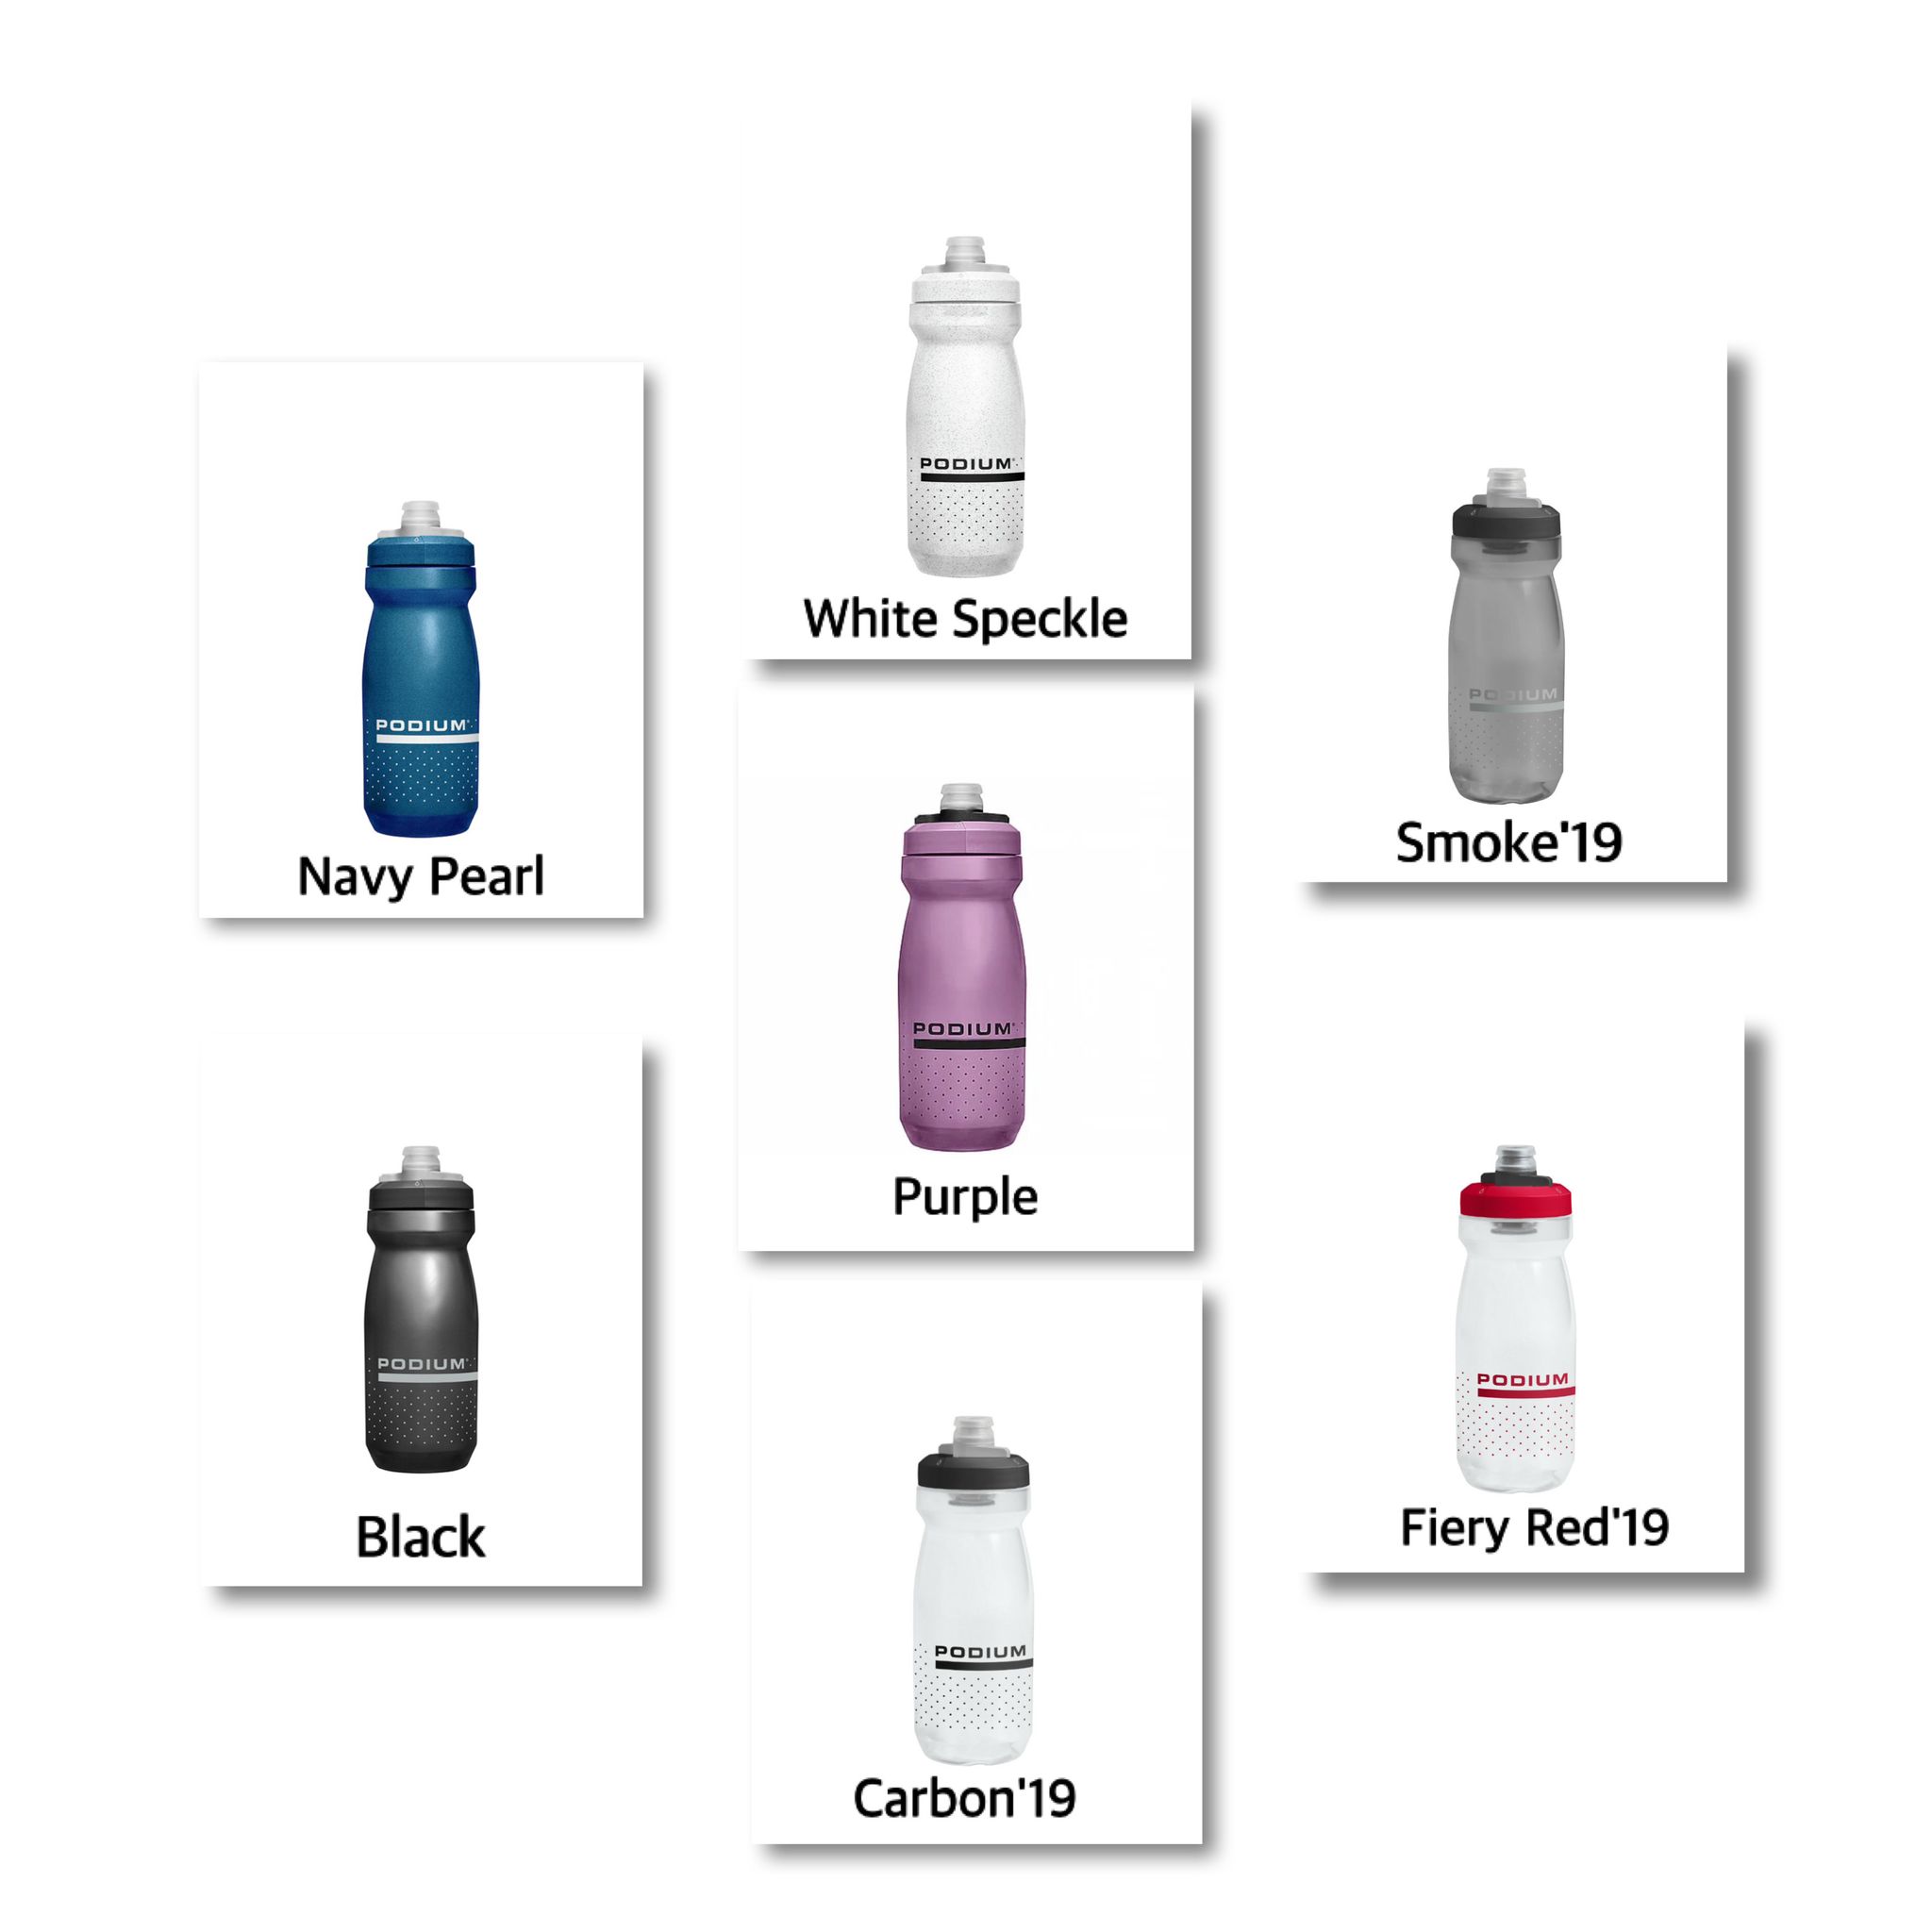 Genuine Camelbak Podium Water Bottle, Navy Pearl, 24oz, Brand New